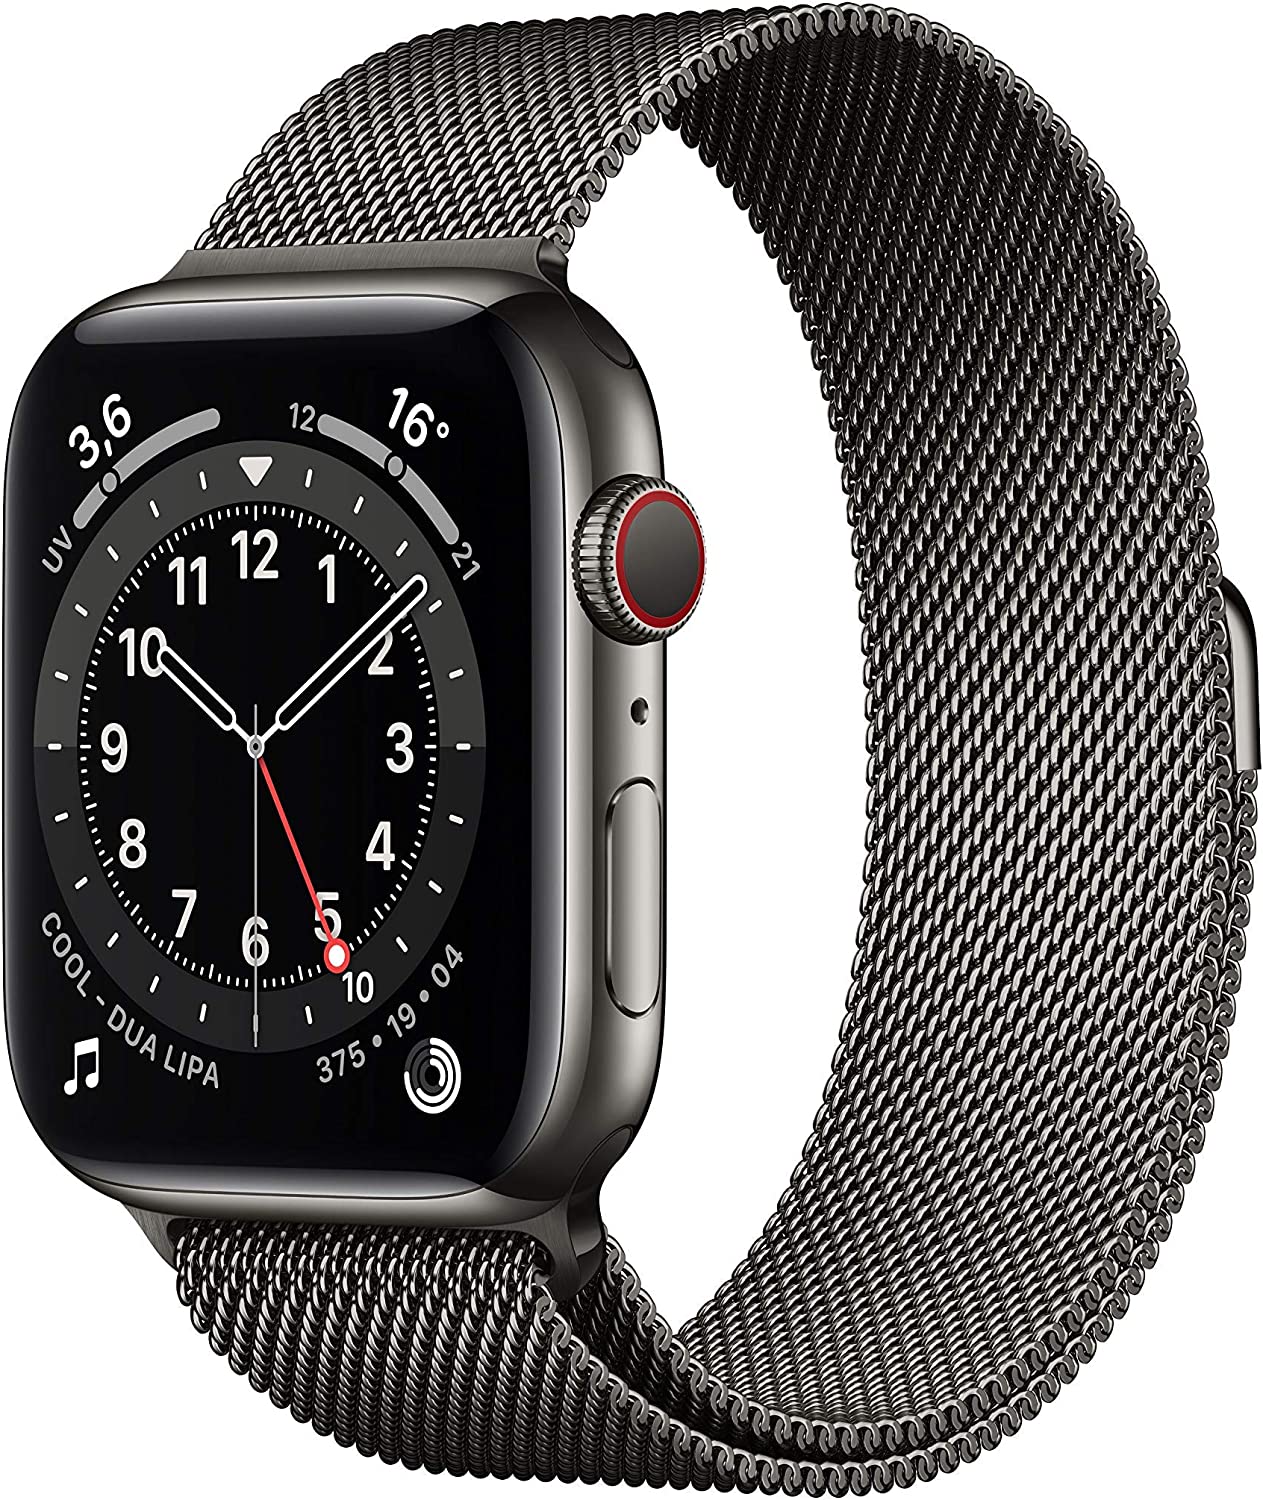 Apple Watch Series 6 - Cassa in acciaio e GPS